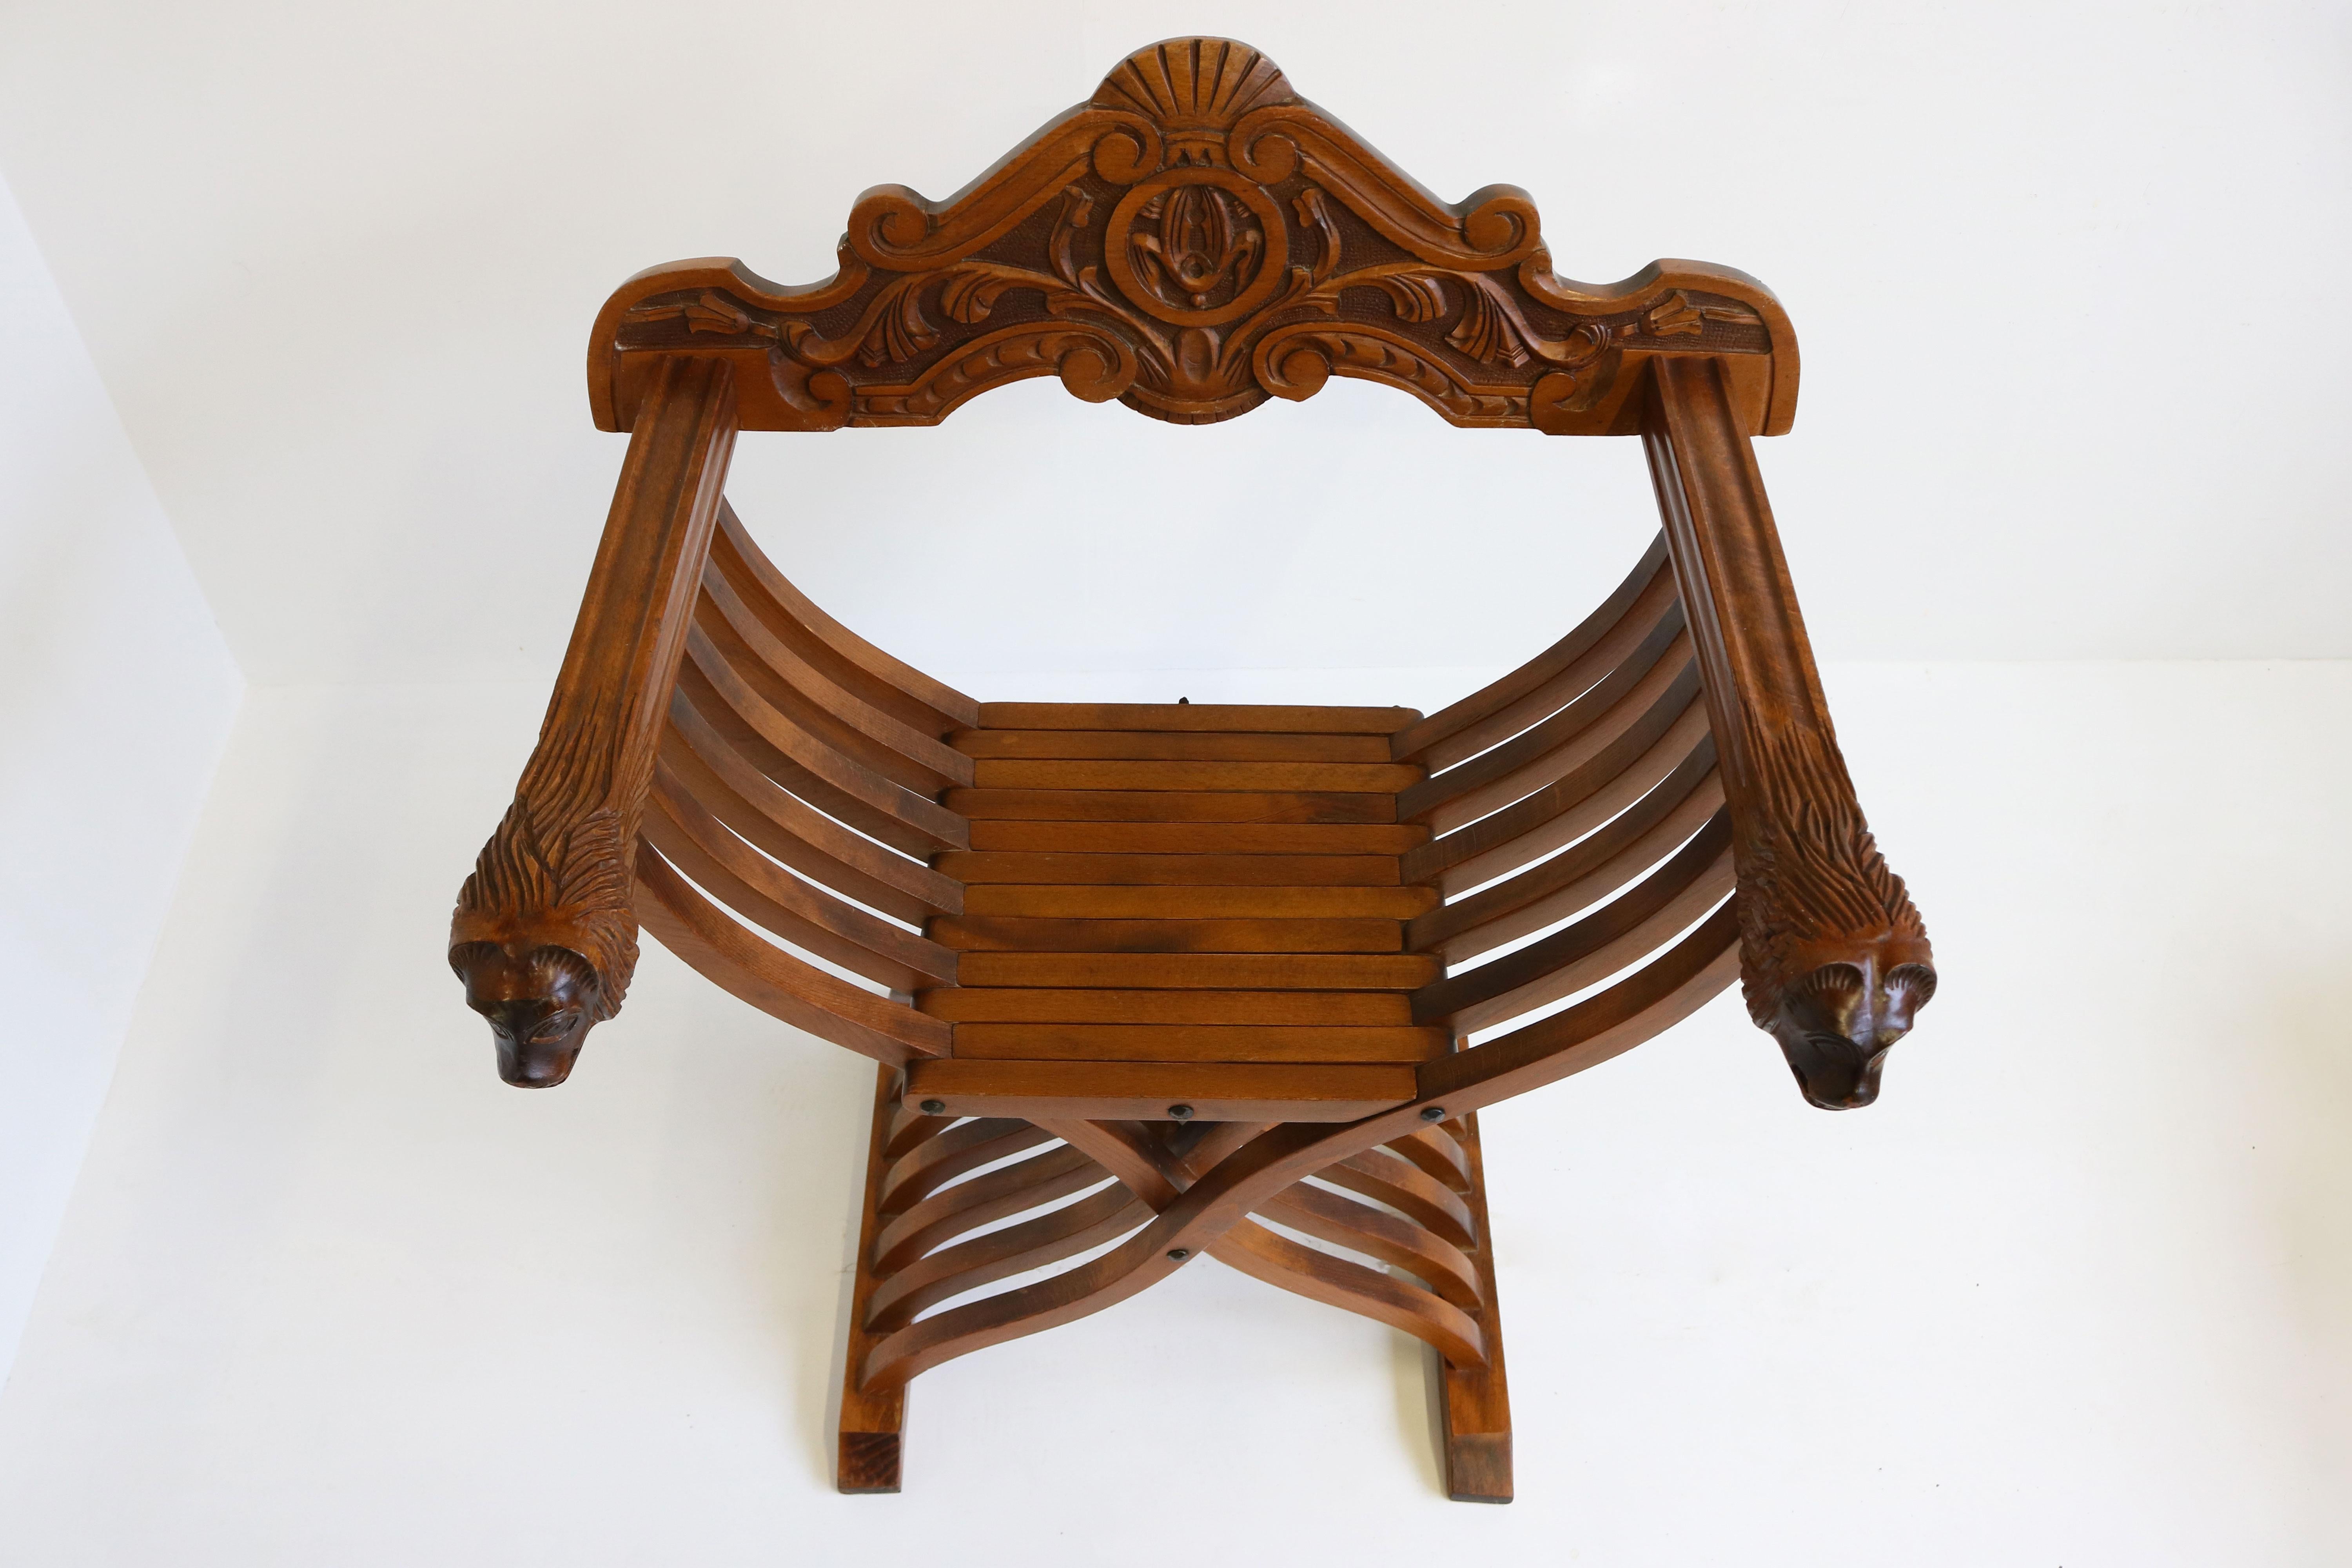 Hand-Carved Italian 19th Century Renaissance Revival Savonarola Chair in Walnut Side Chair